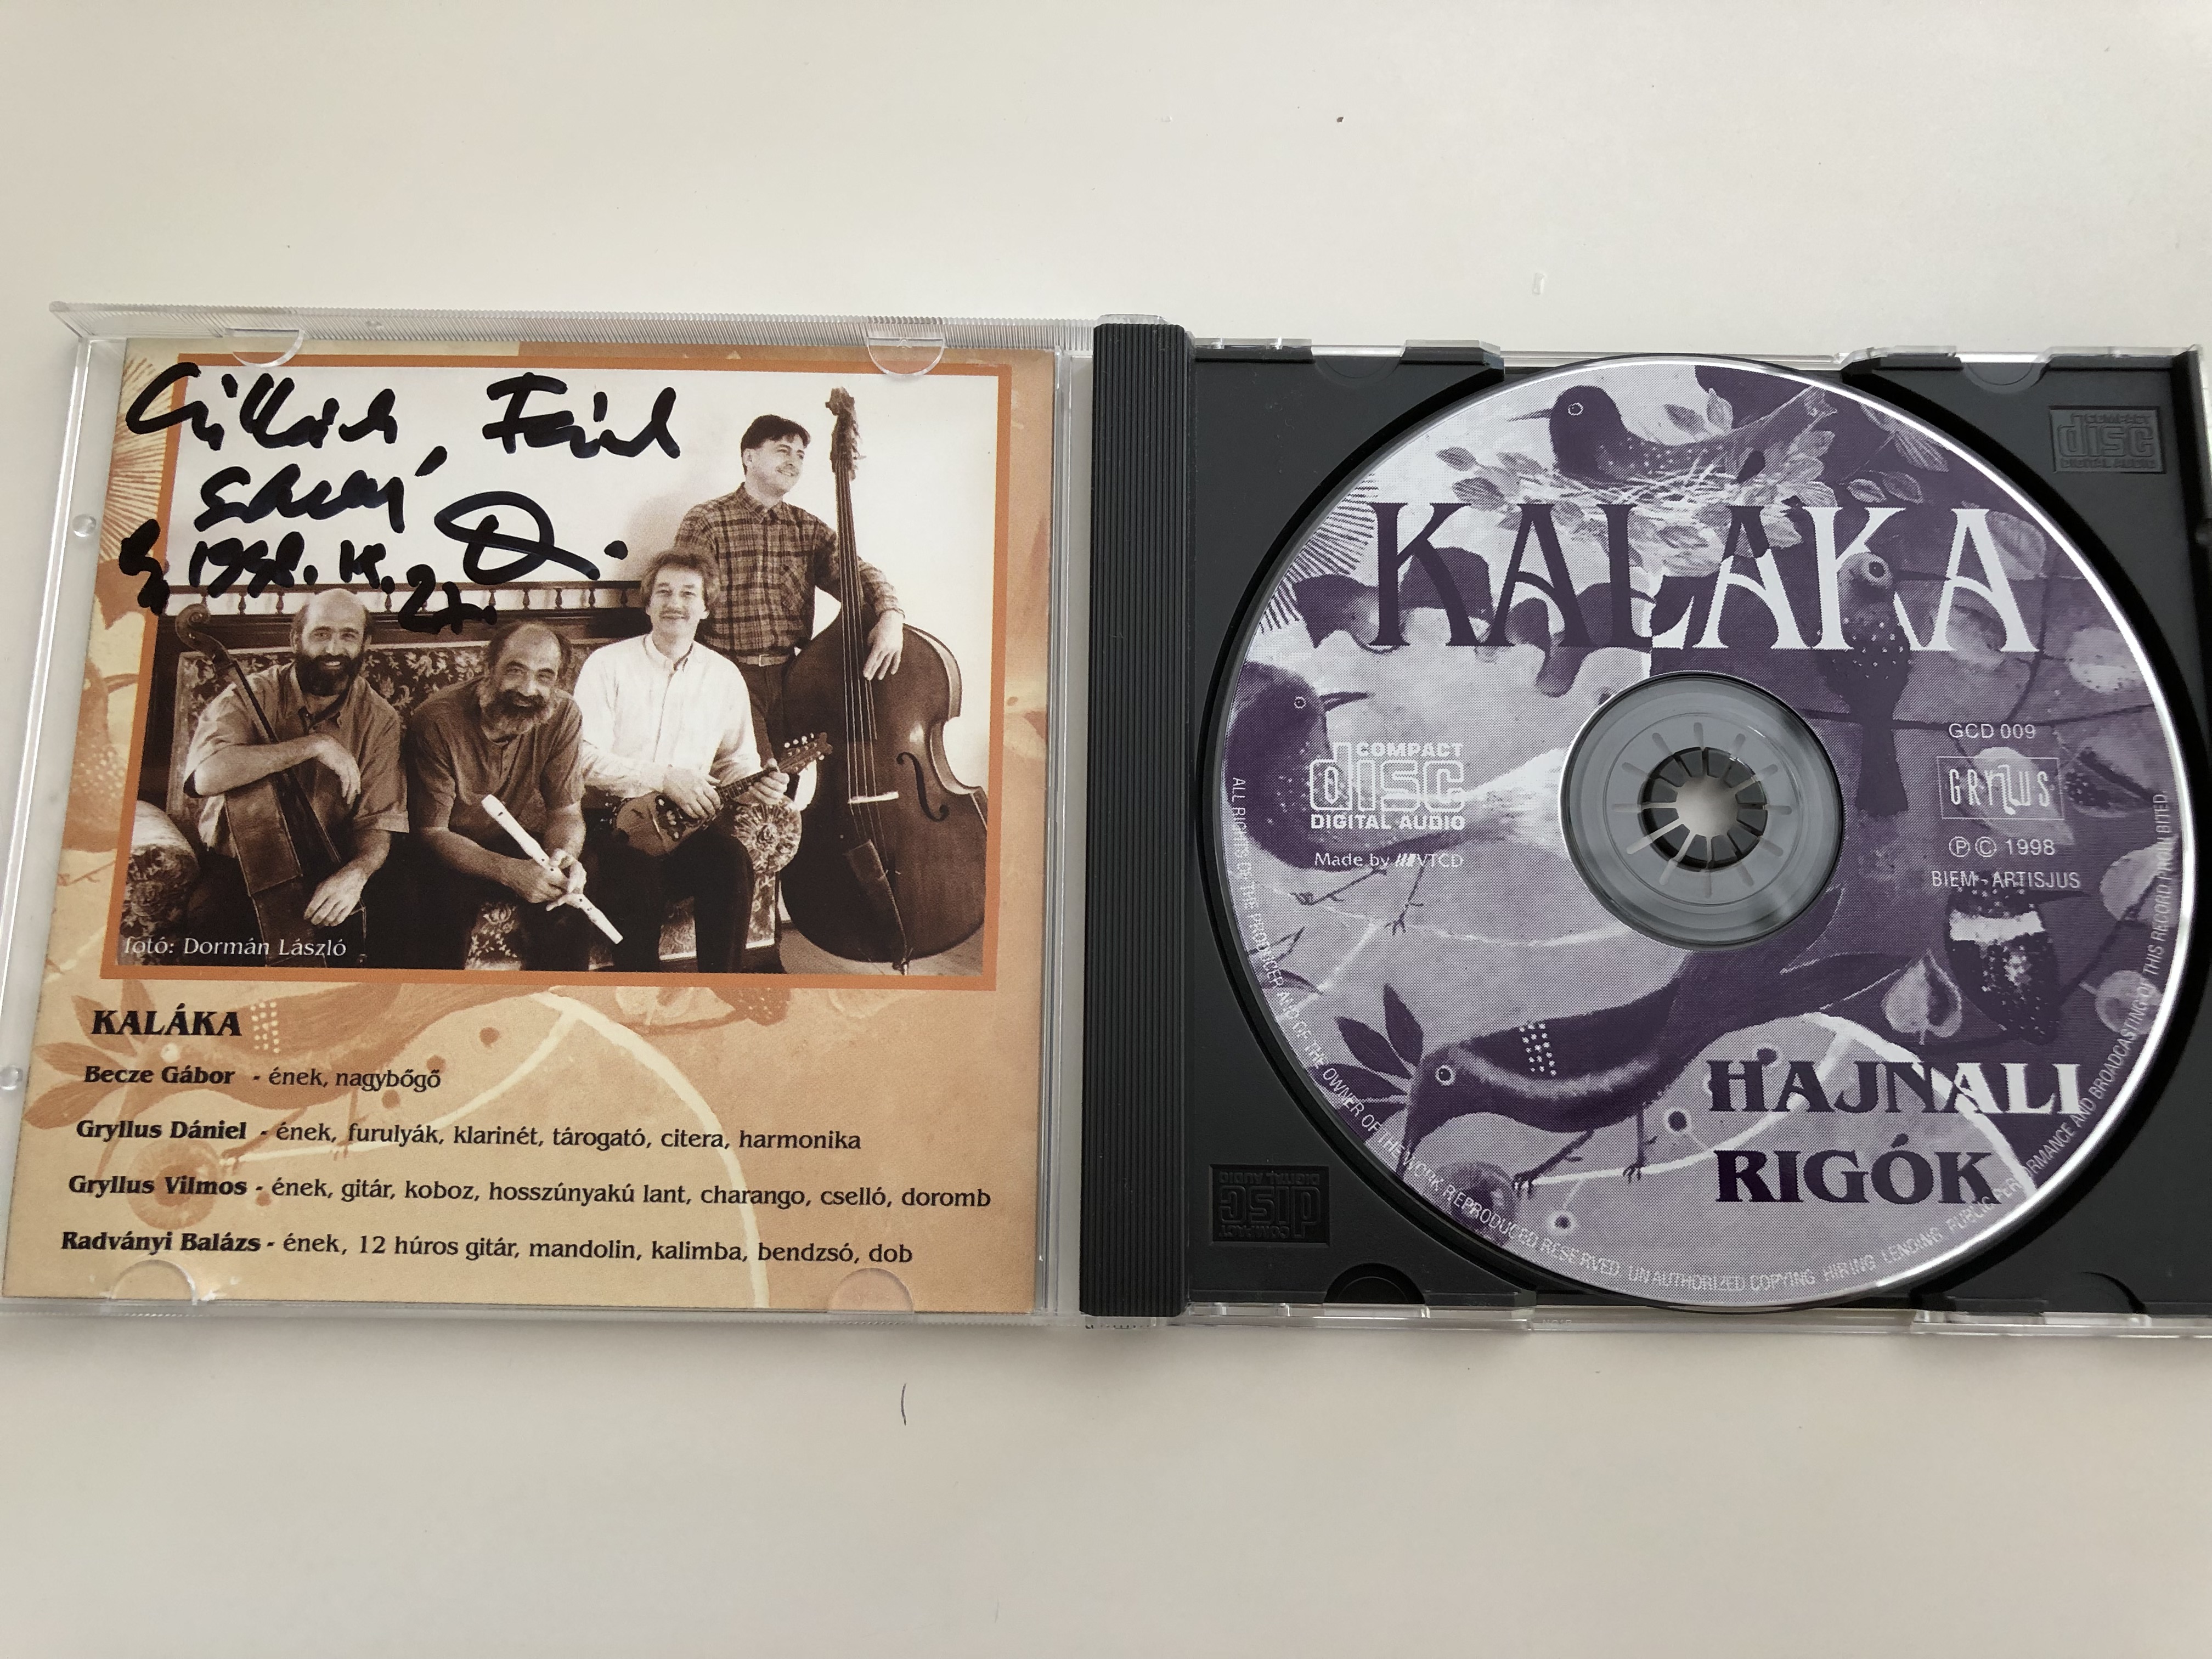 kal-ka-hajnali-rig-k-becze-g-bor-gryllus-d-niel-gryllus-vilmos-radv-nyi-bal-zs-gryllus-audio-cd-1998-gcd-009-5-.jpg